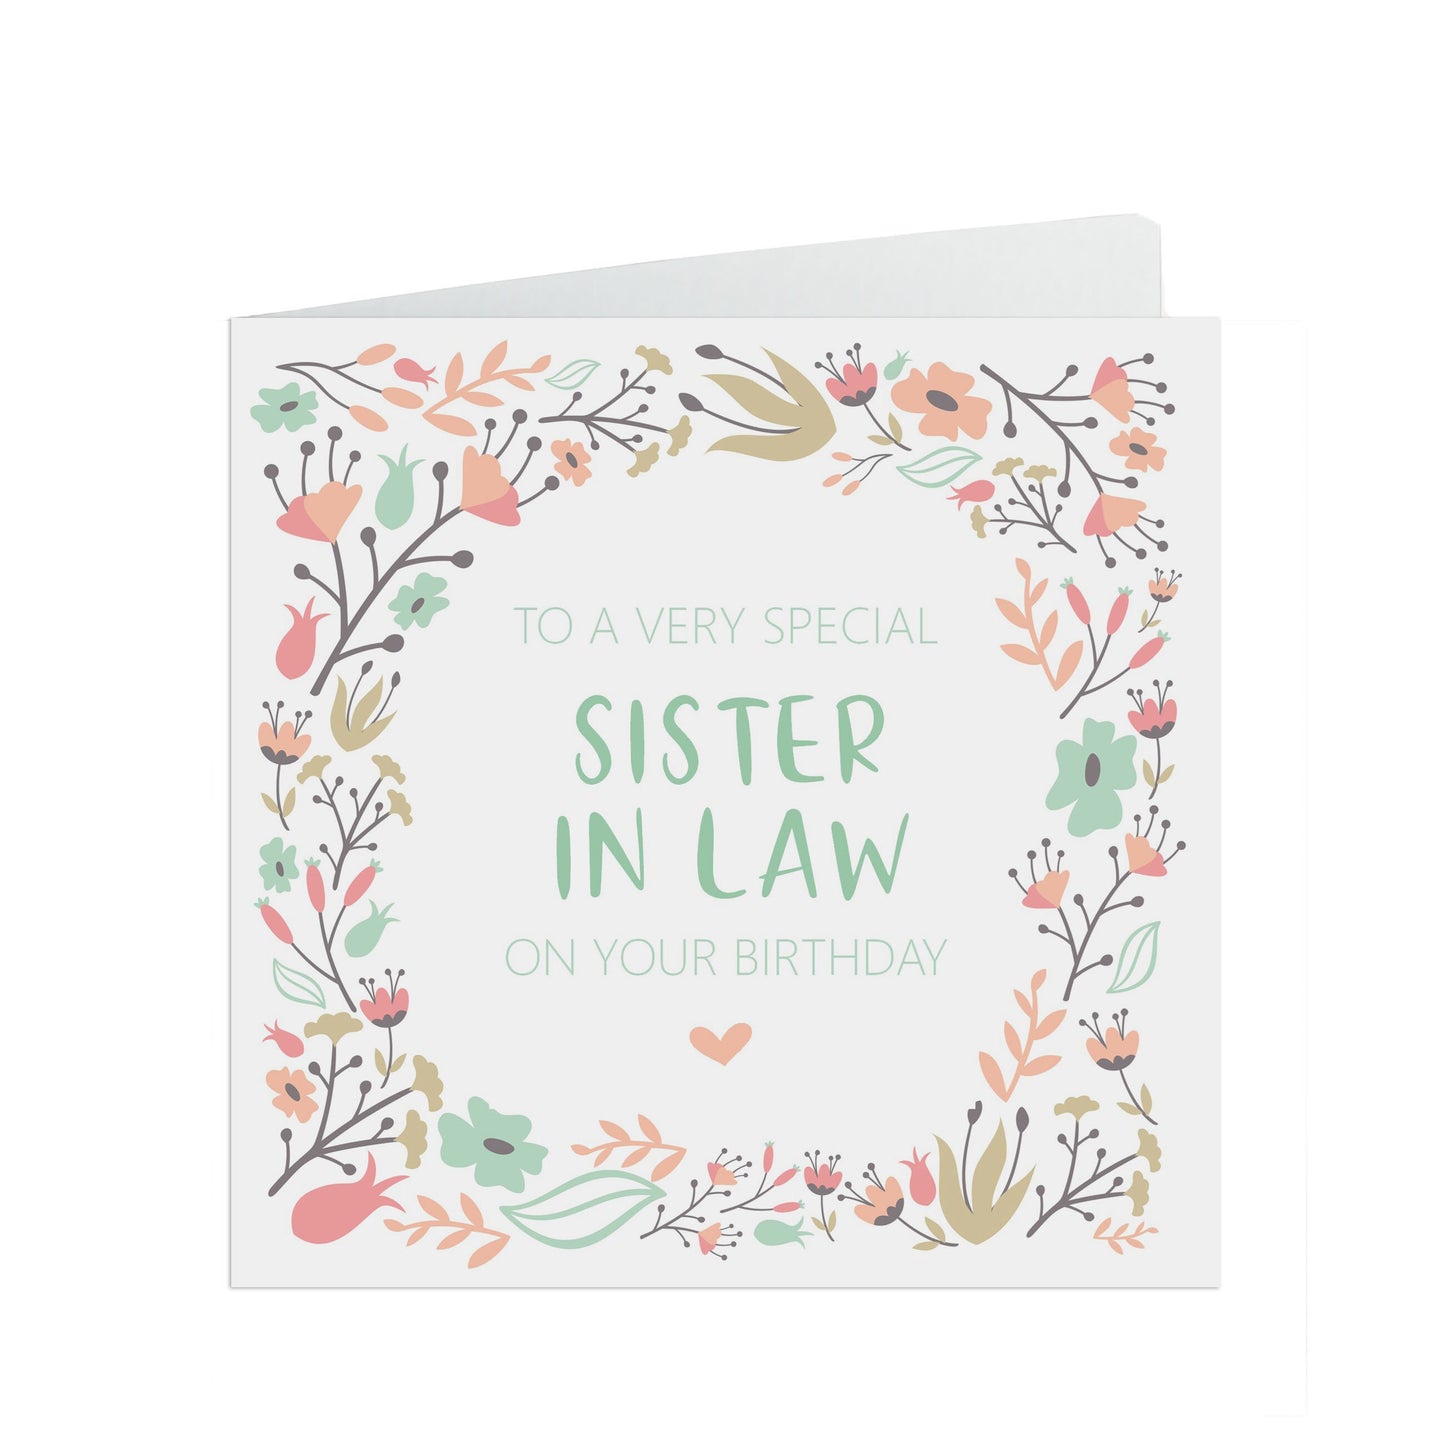 Sister In Law Birthday Card, Sage & Peach Flower Design